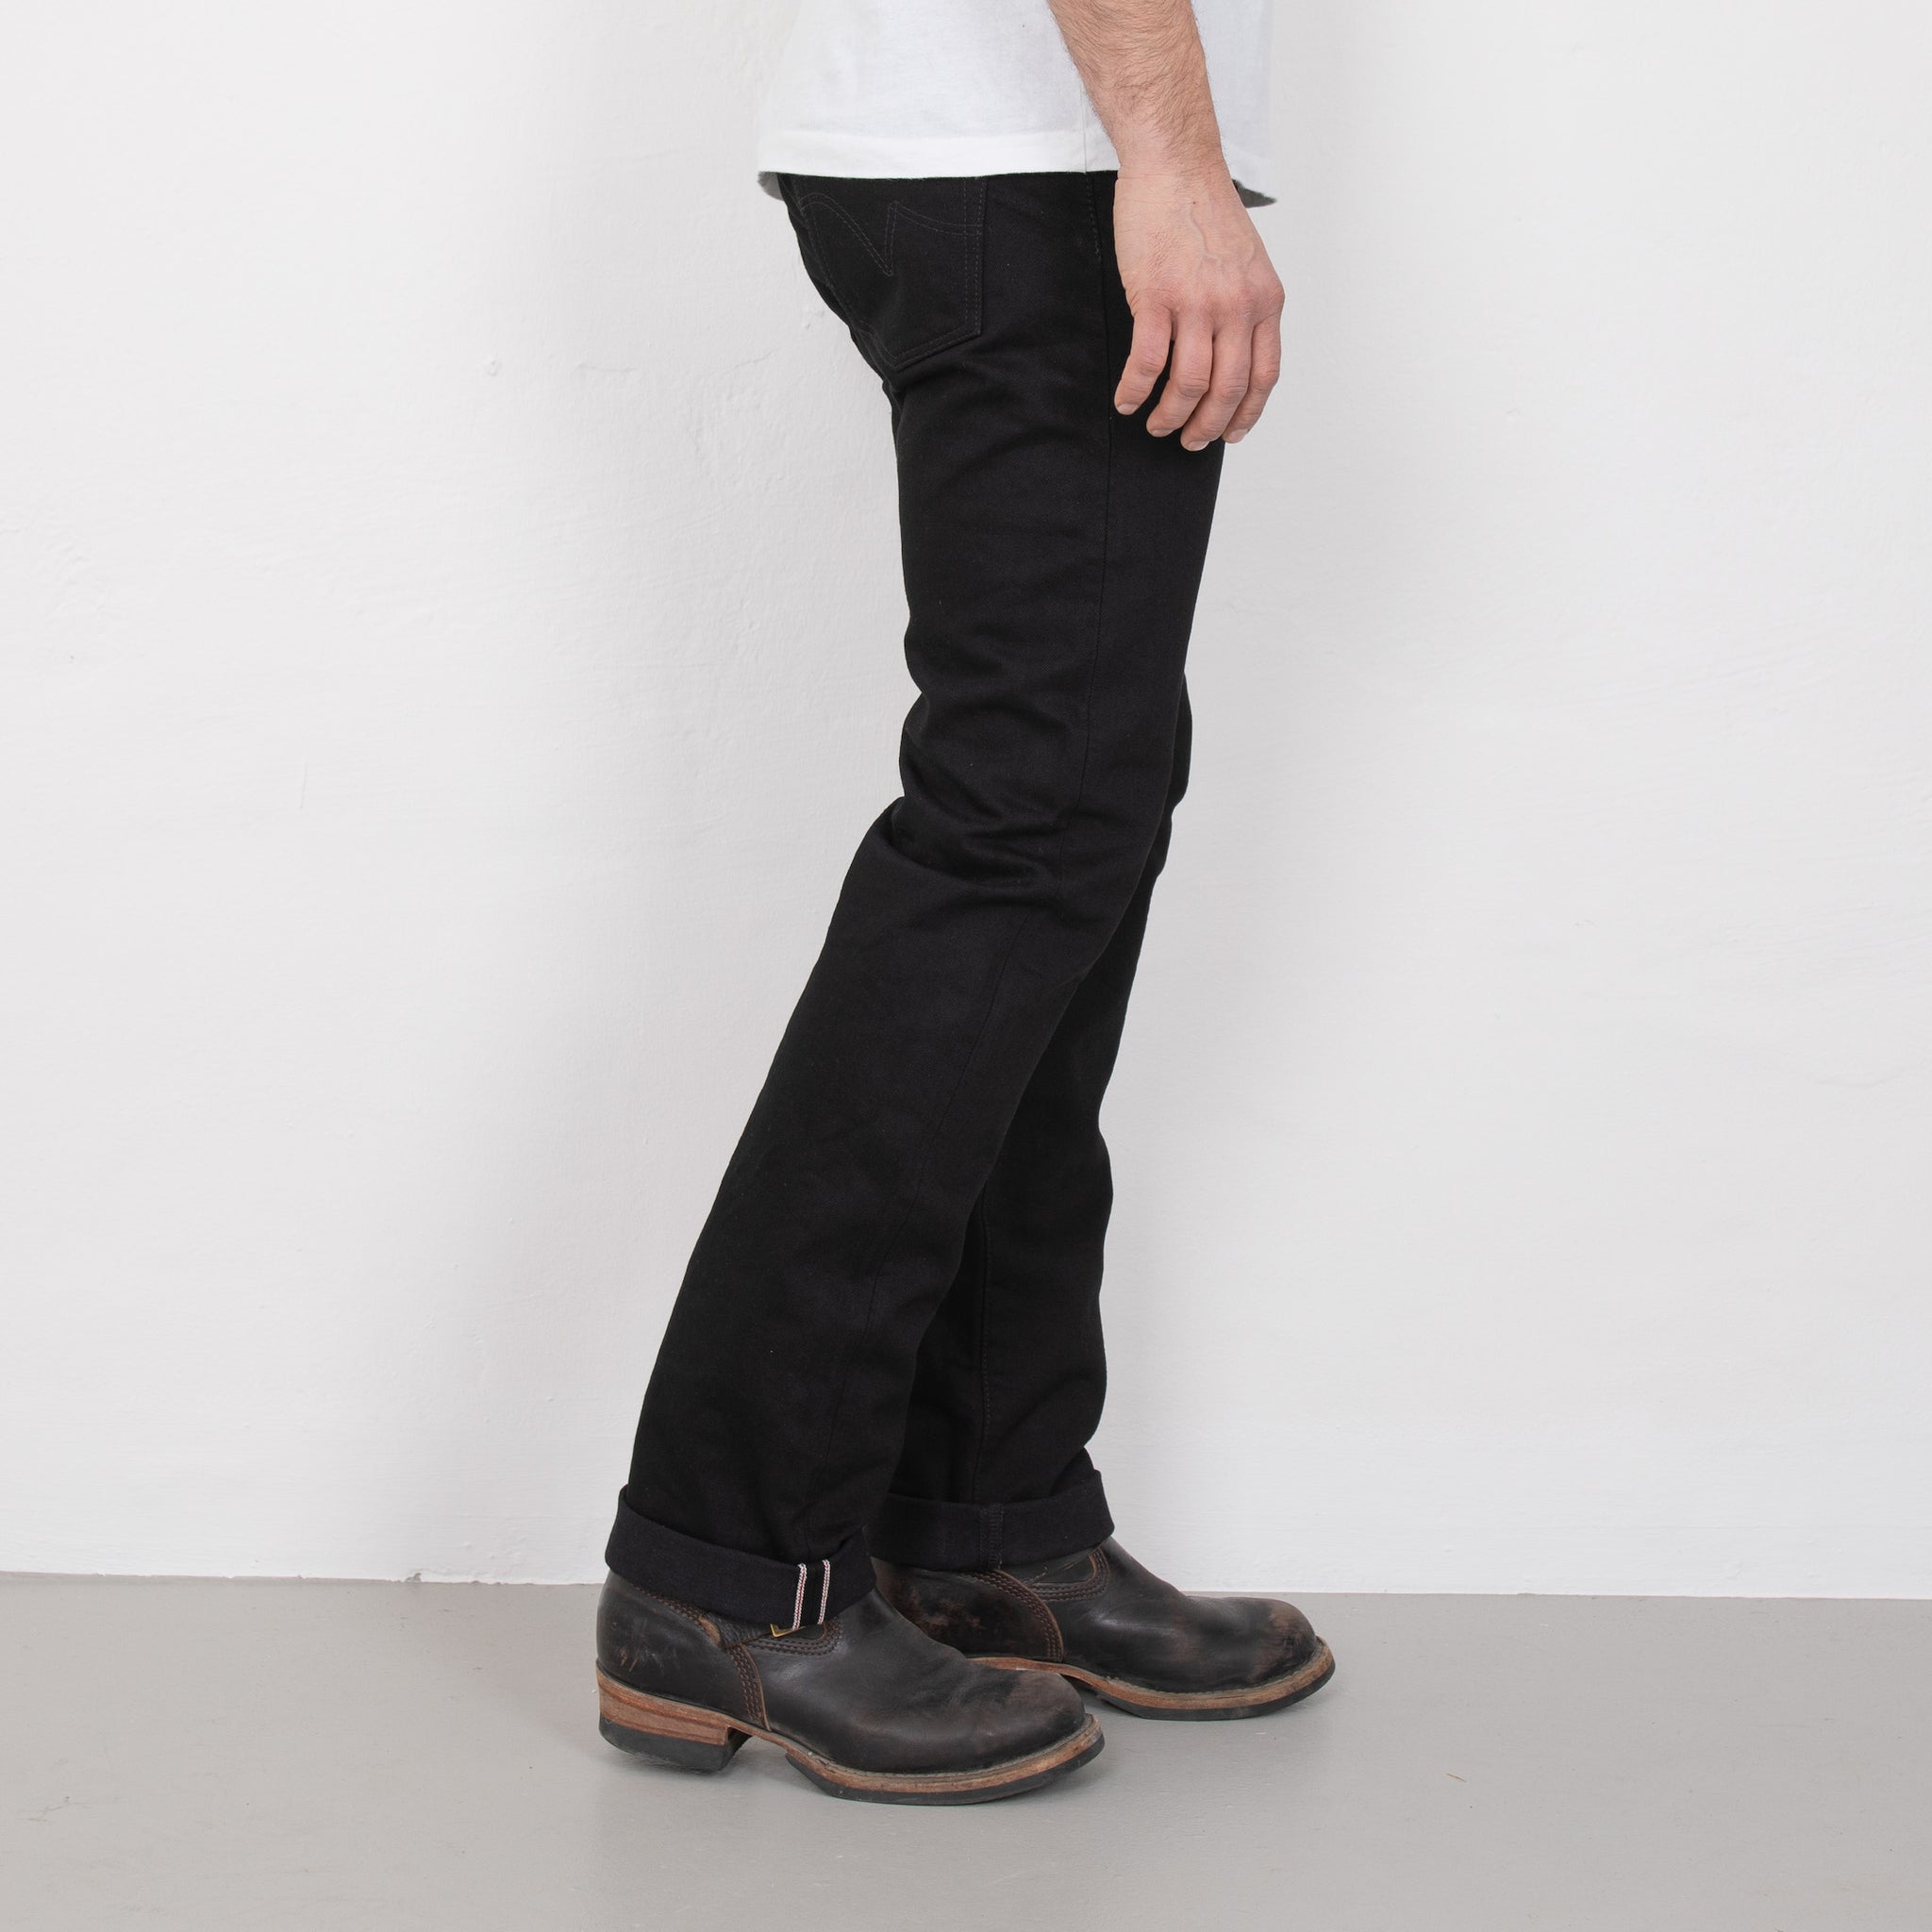 IH-666s-142bb - 14oz Selvedge Denim Slim Straight Cut Jeans - Black/Black